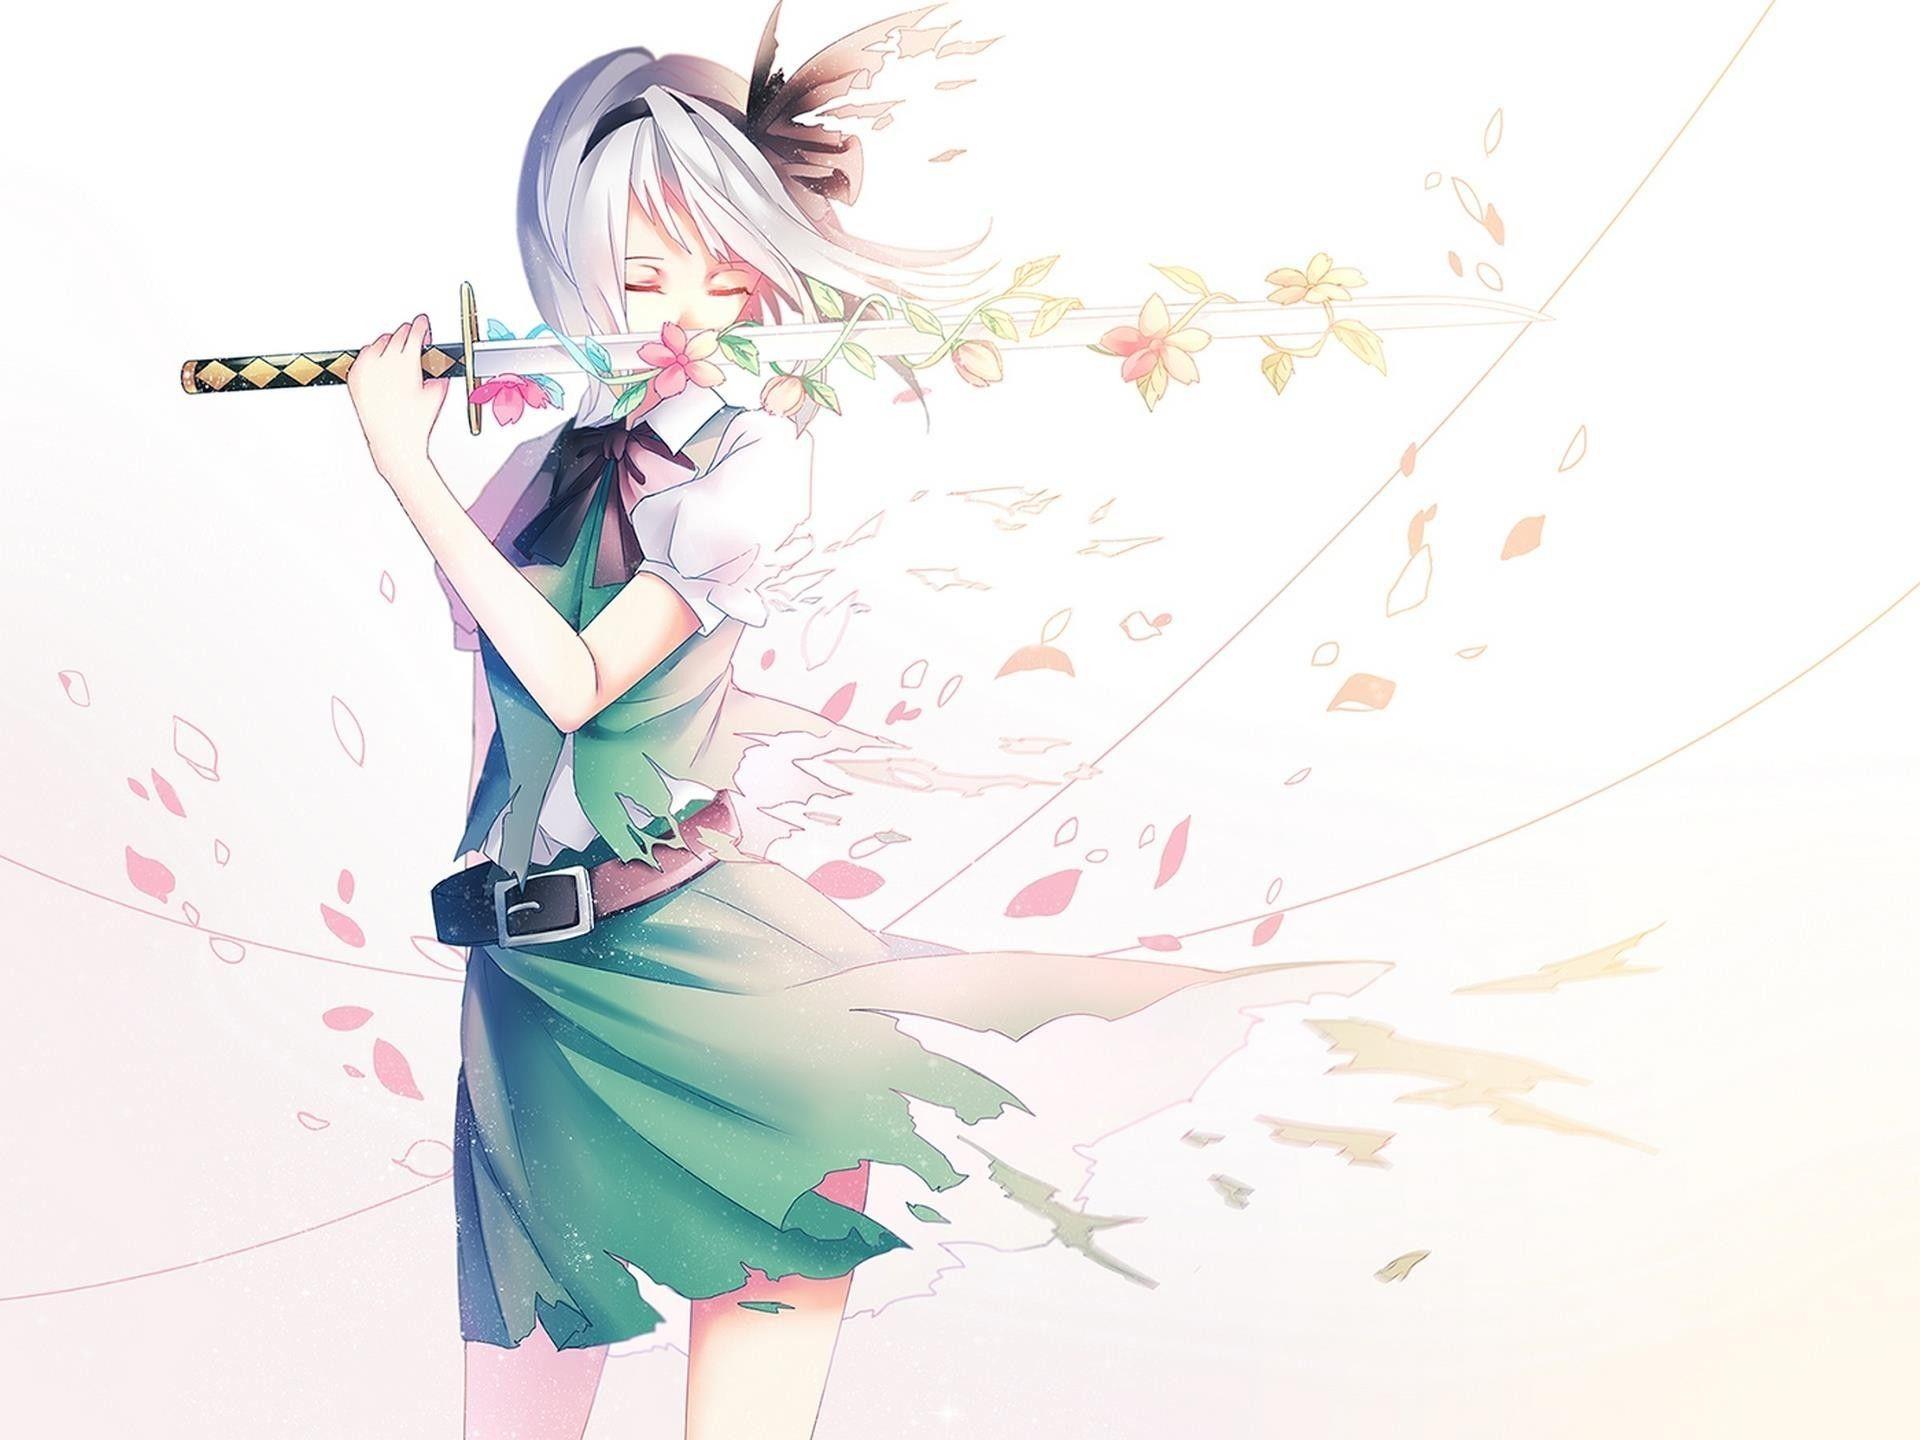 Anime Girl with Sword Wallpaper Free Anime Girl with Sword